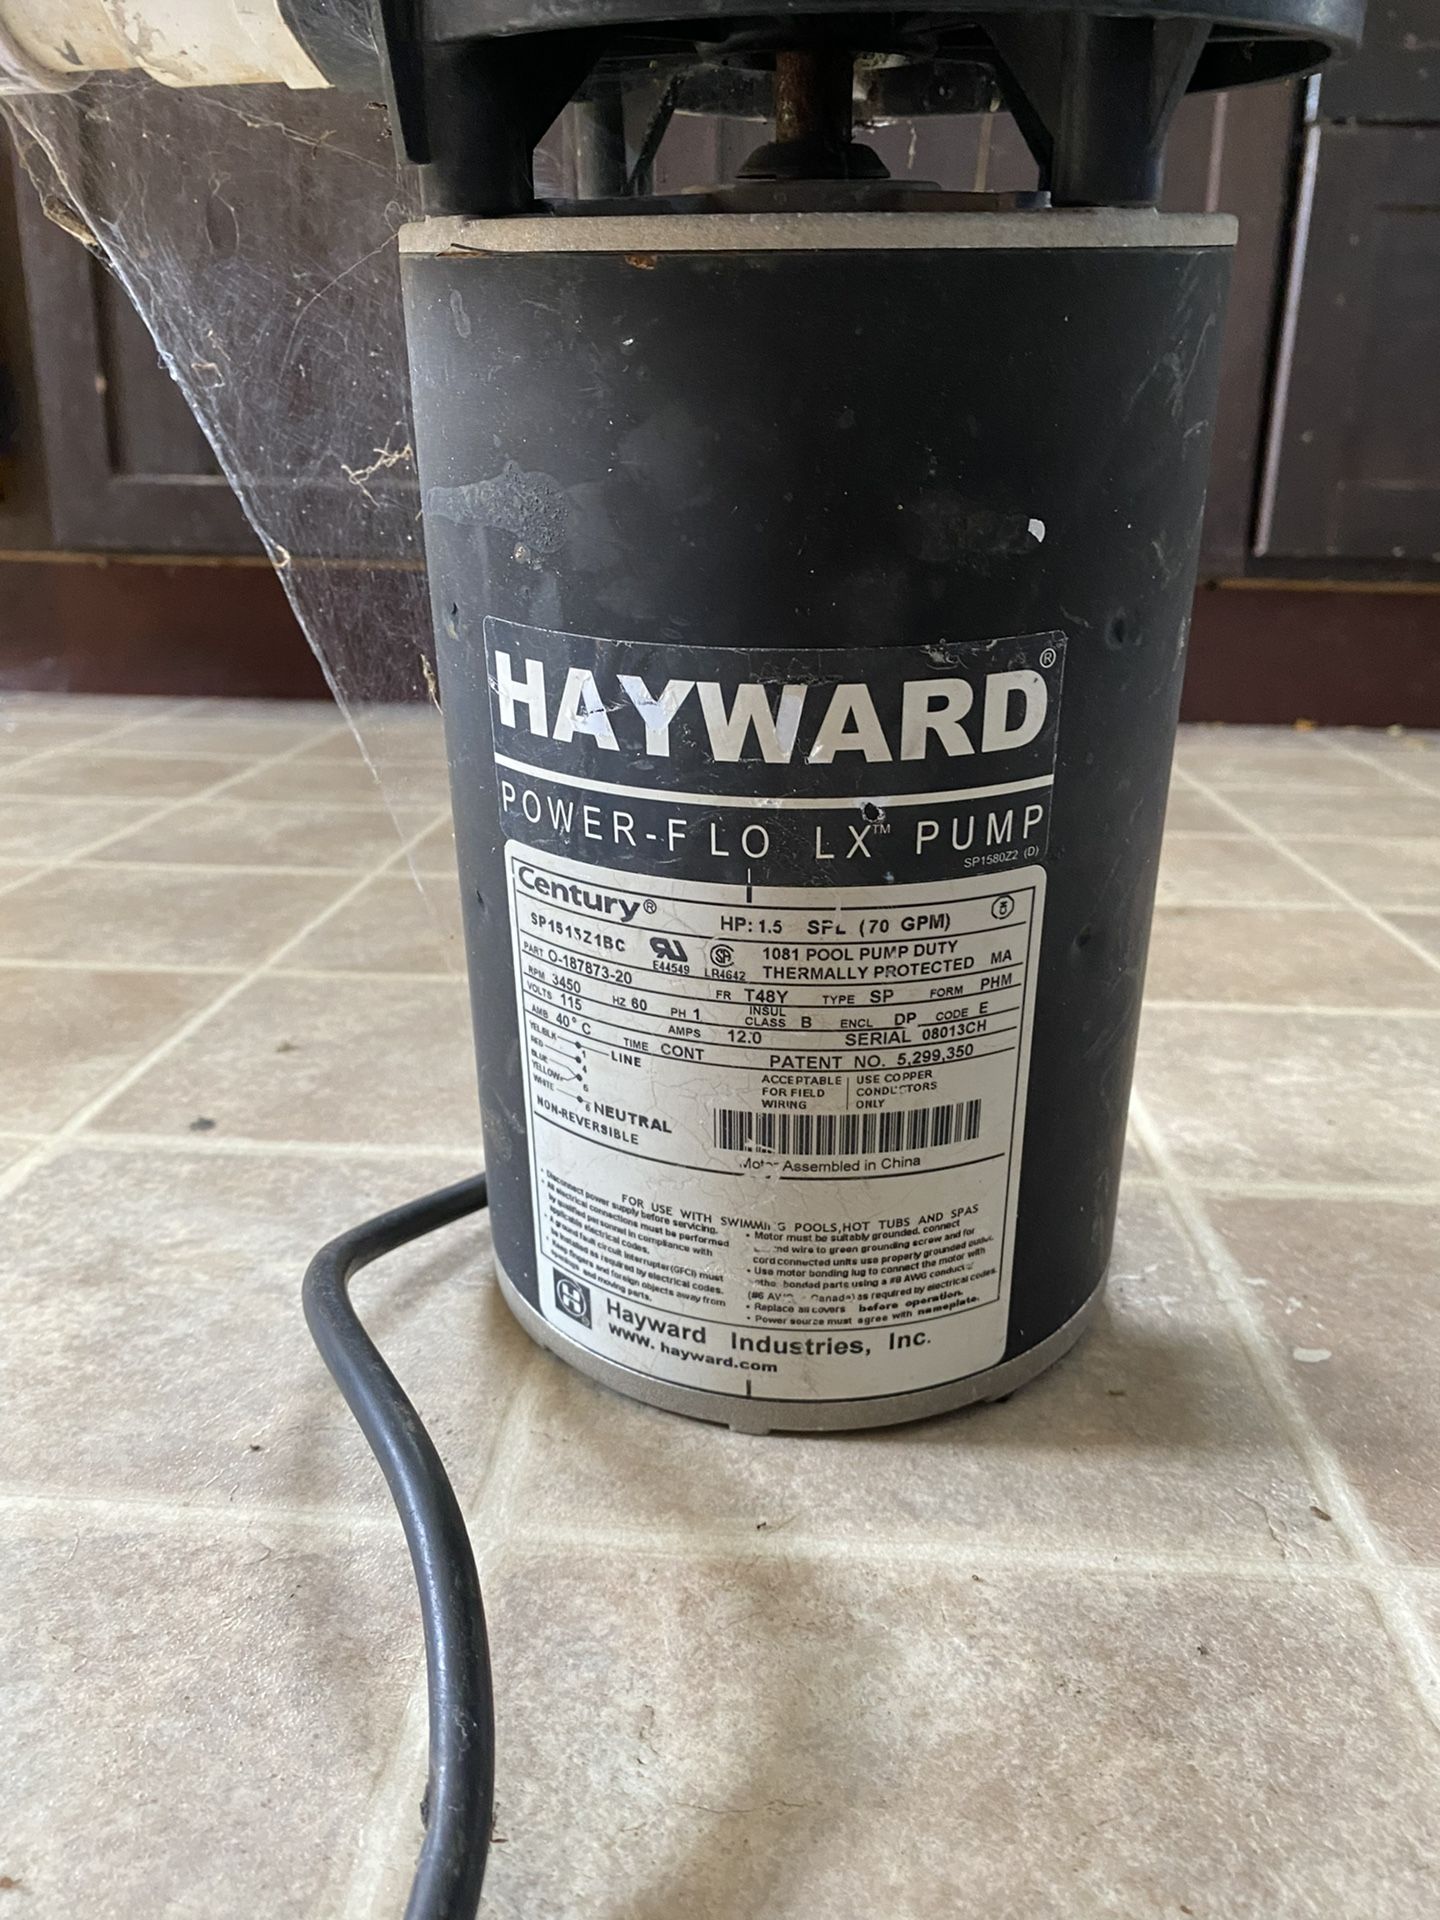 Hayward Pool Filter